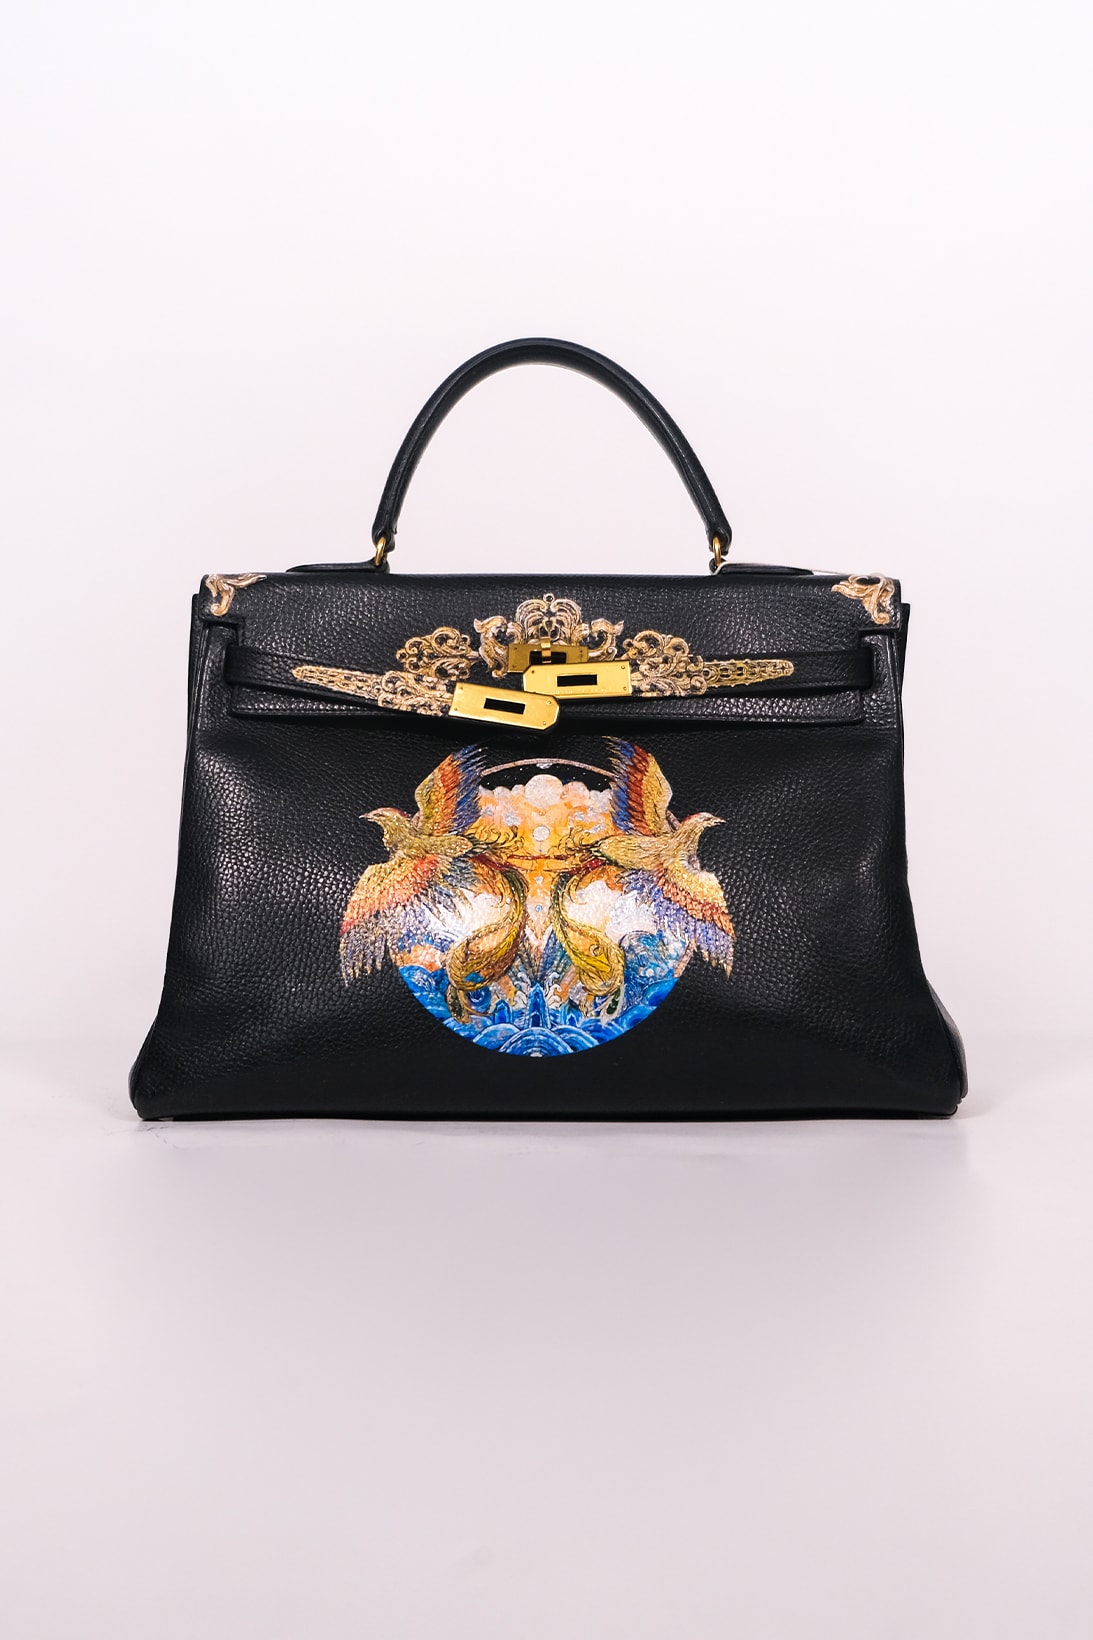 Wear Earthero Art Exhibition Hermes Kelly 35 Leather Handbag Fashion Sustainability Showcase Info